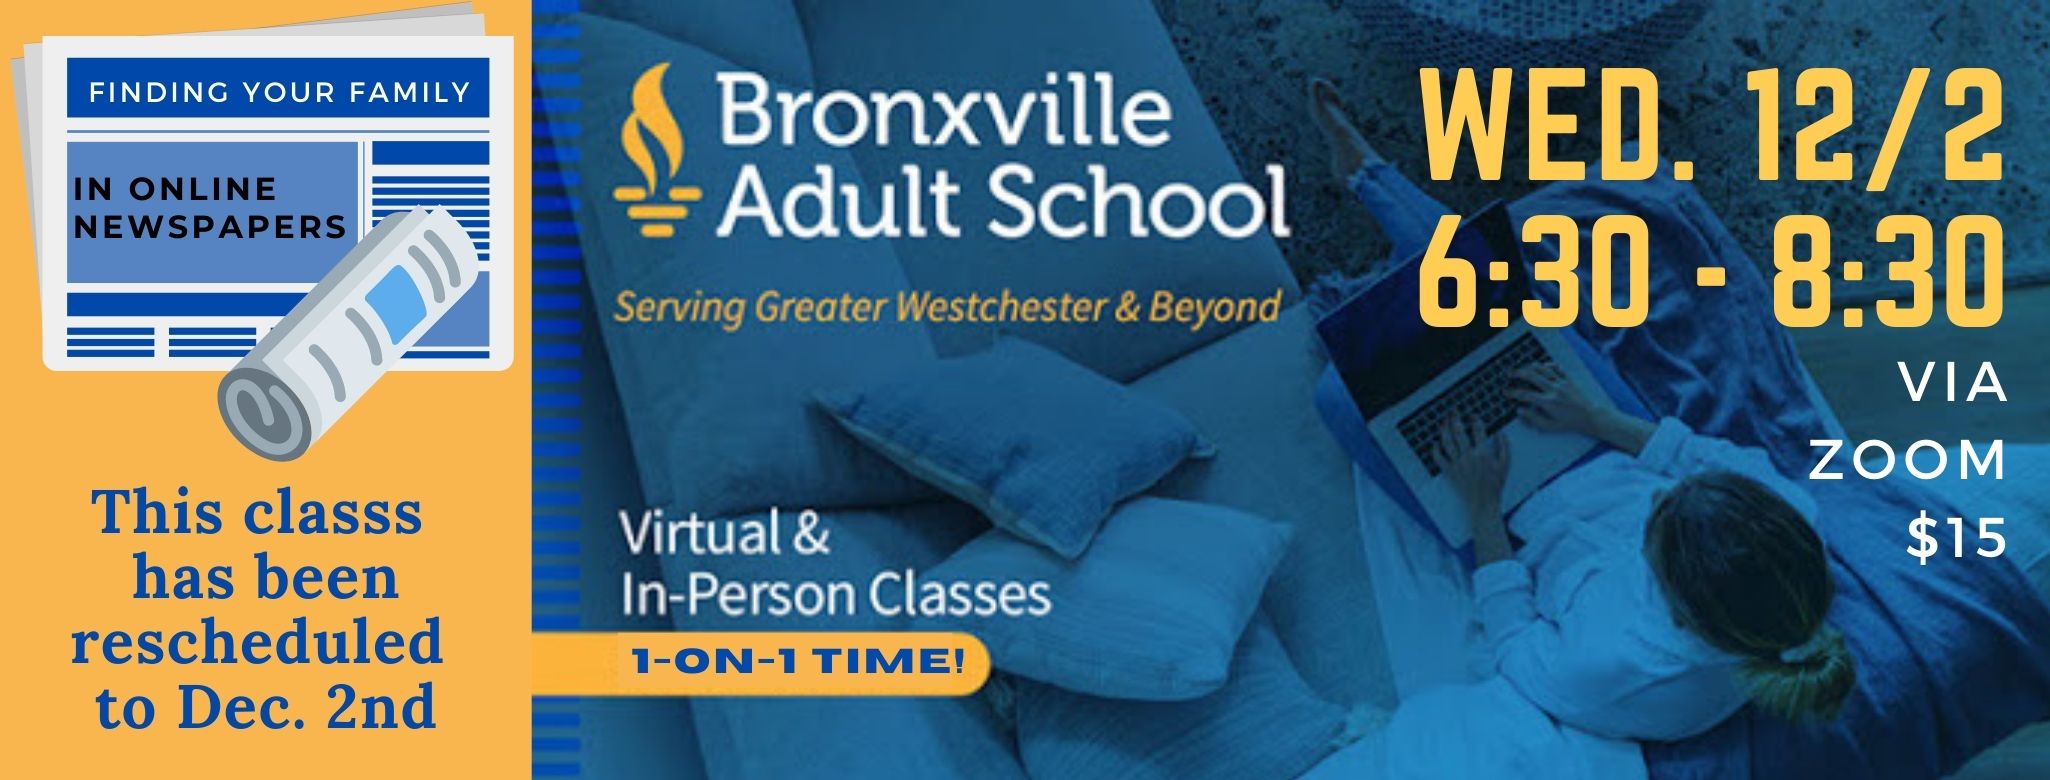 Bronxville Adult School